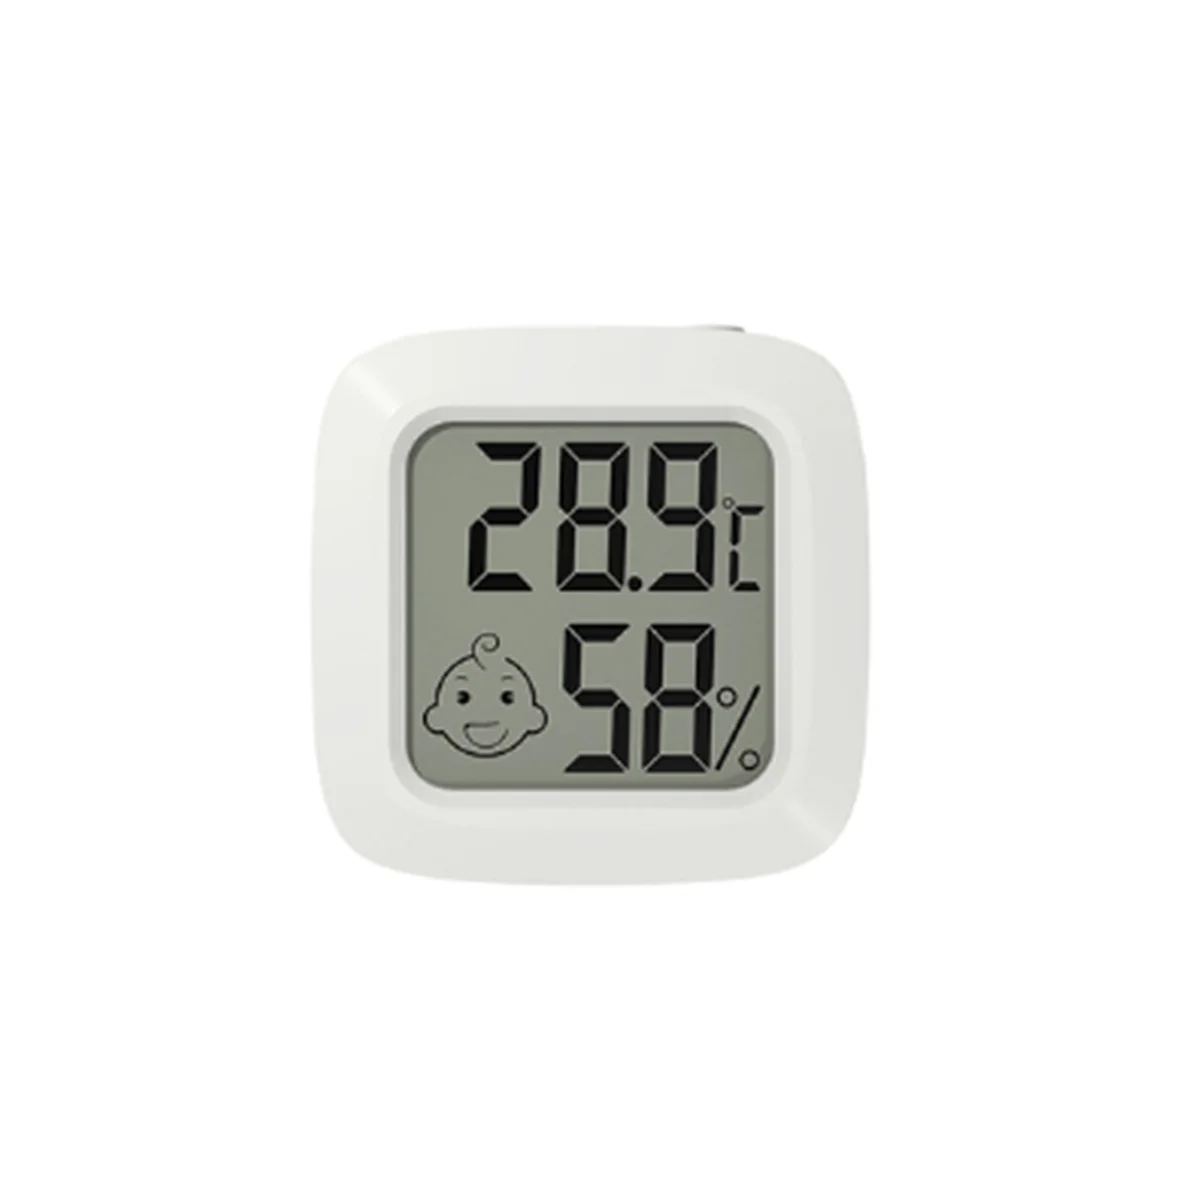 

Mini LCD Digital Thermometer Hygrometer Magentic Temperature Meter Humidity Sensor Weather Station White